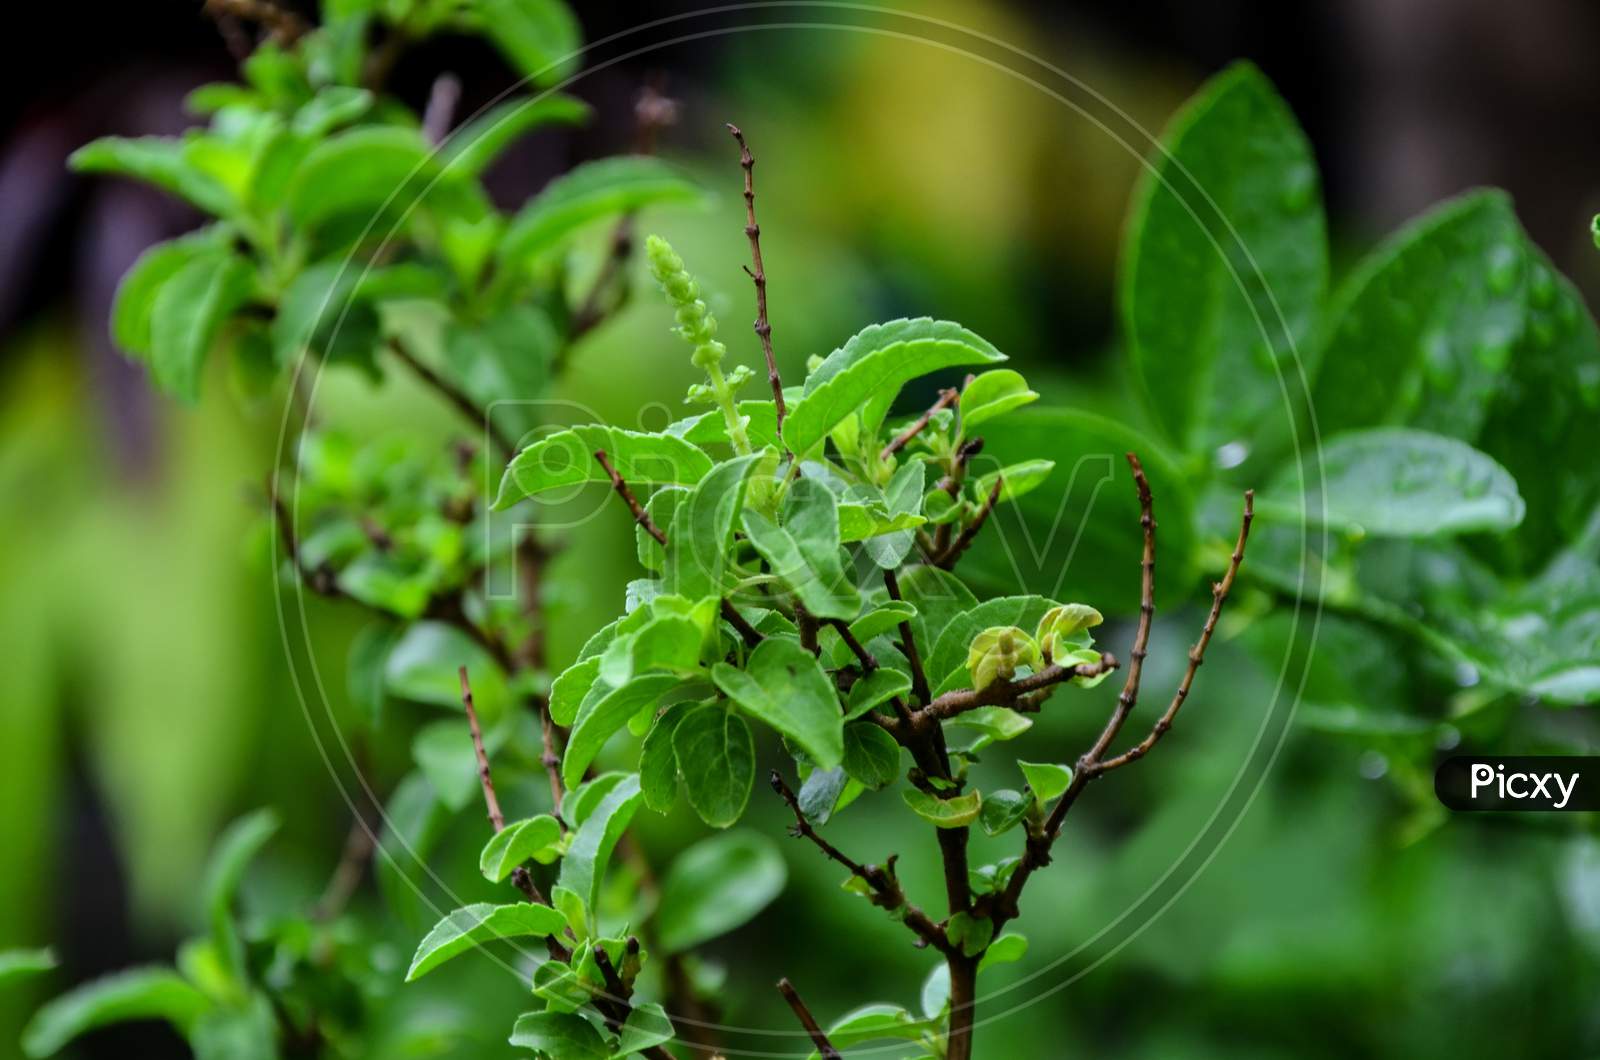 Tulasi plant in monsoon season